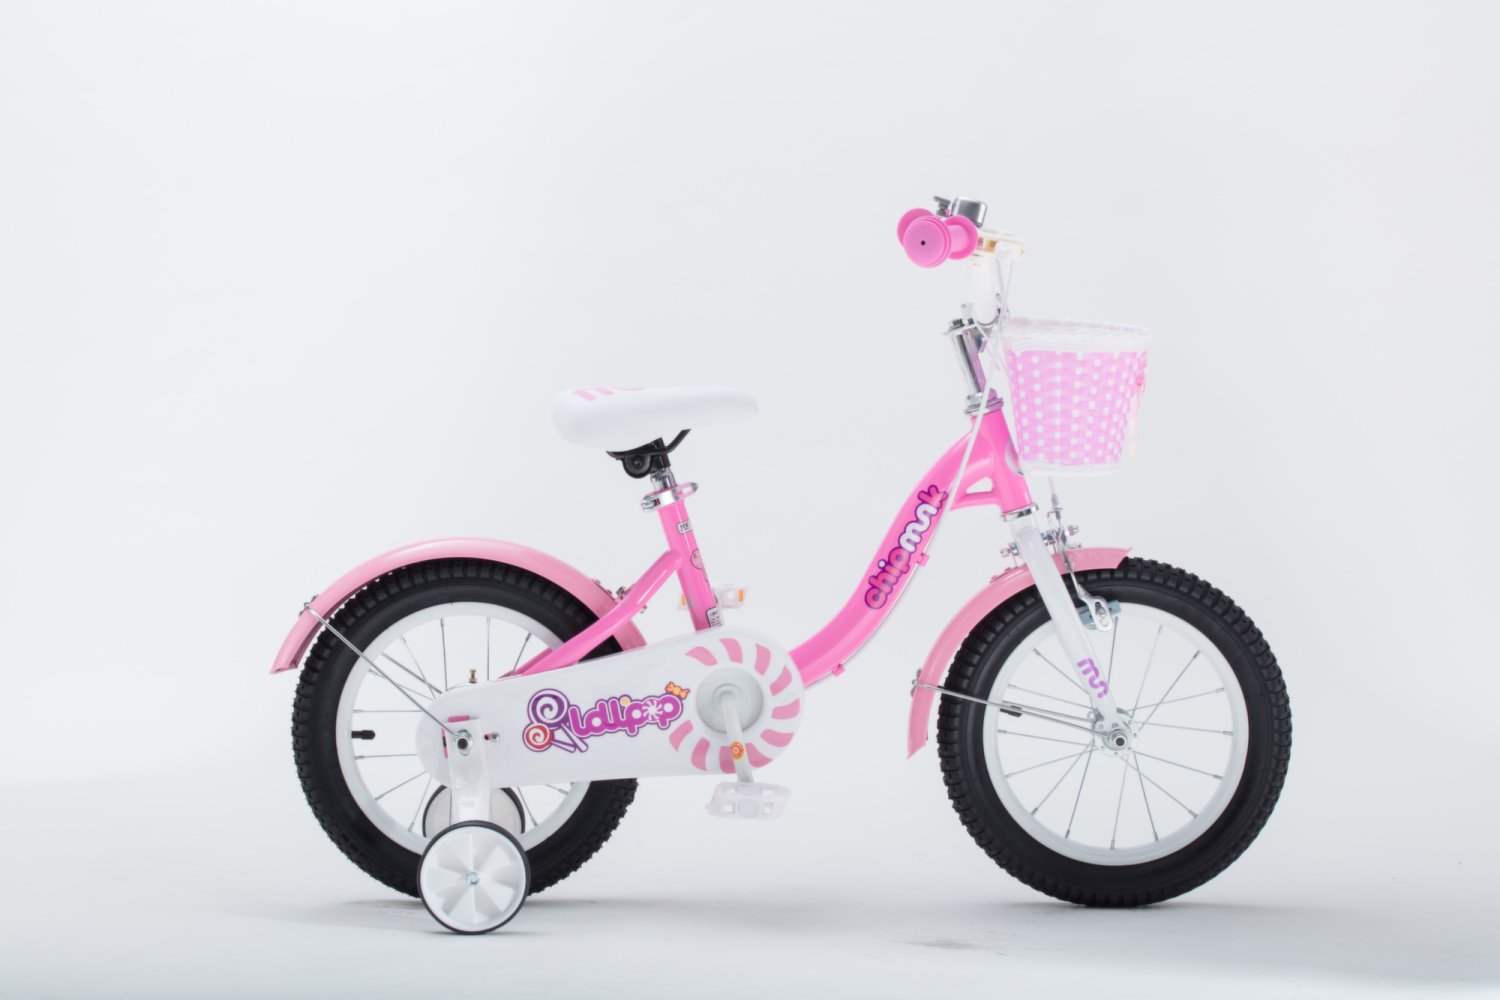 Royal Baby Детский велосипед Royal Baby Chipmunk MМ 14  2021